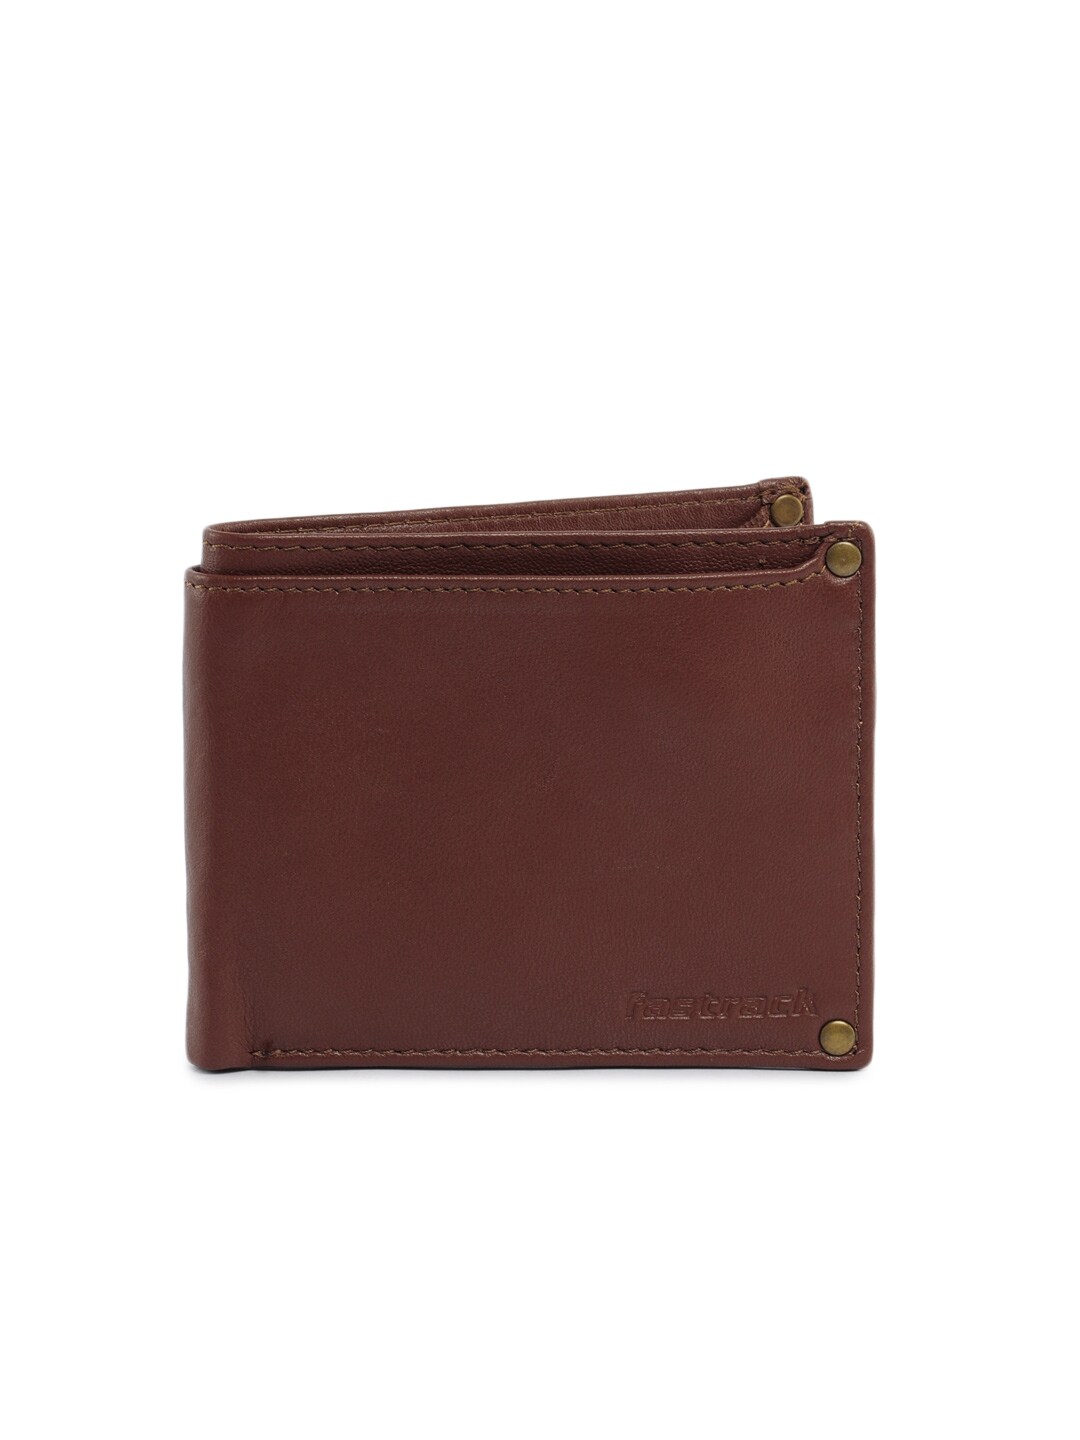 Fastrack Men Leather Brown Wallet